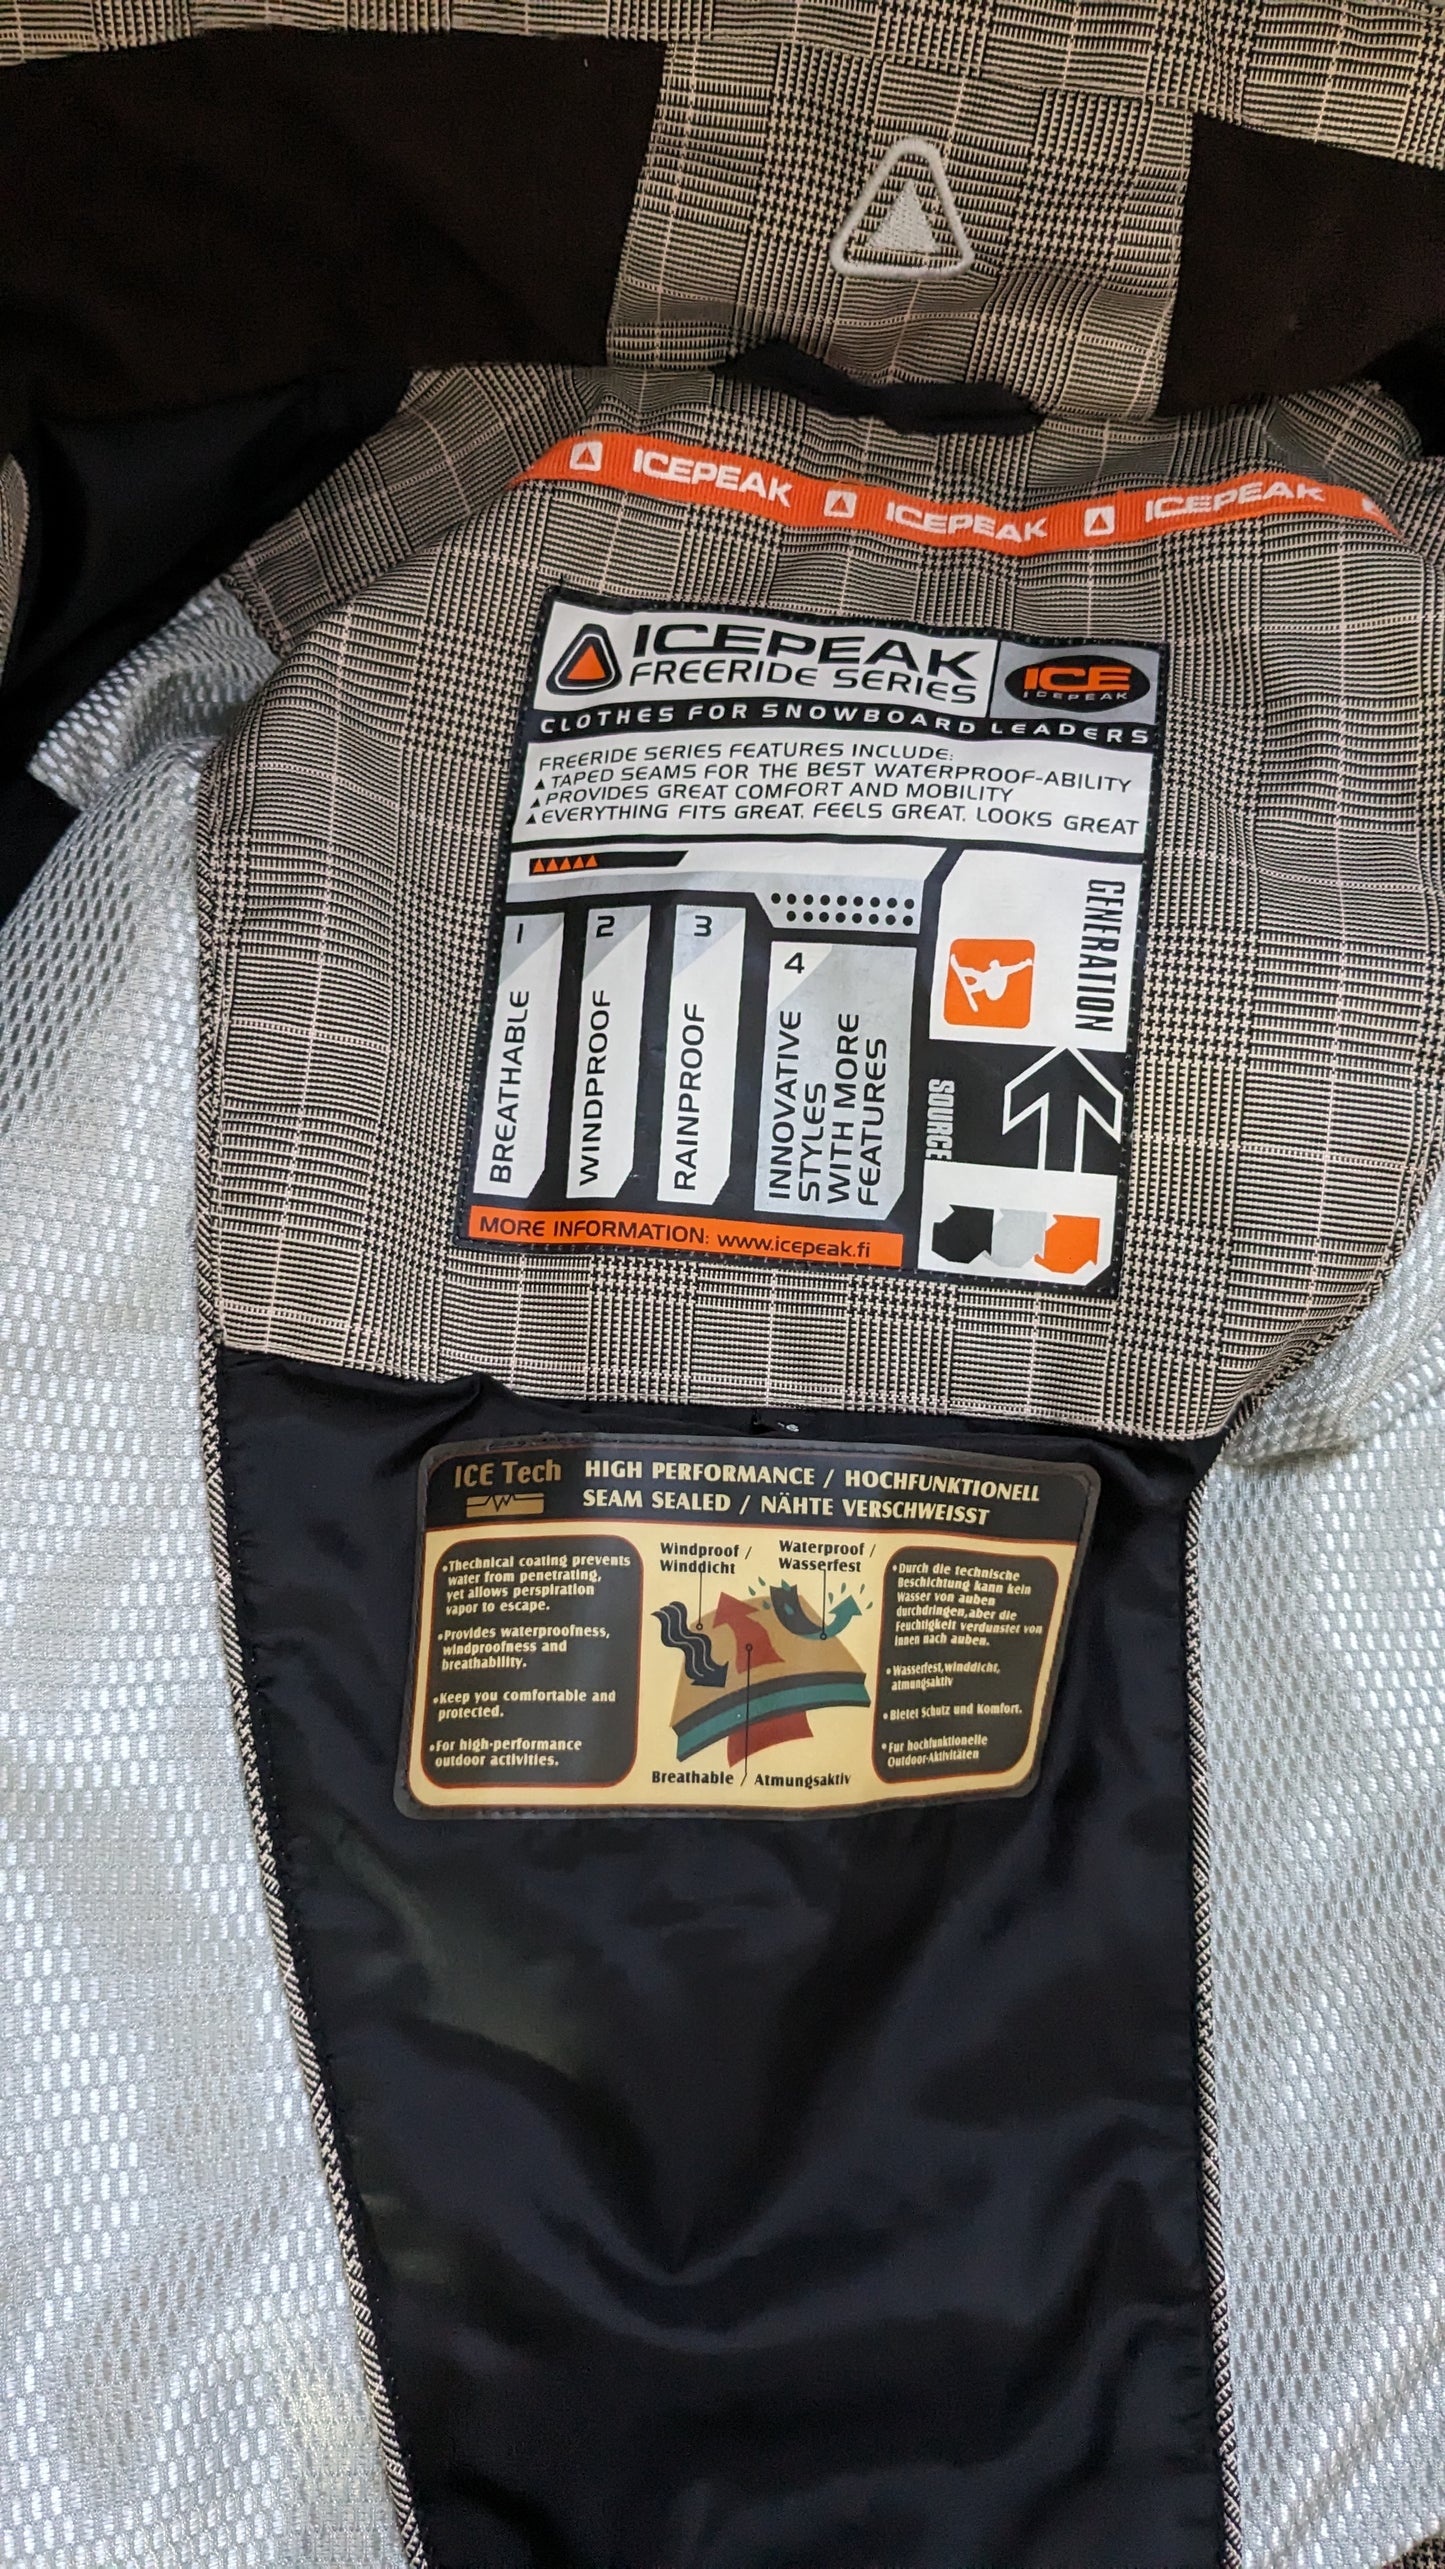 Manteau de ski tendance - Icepeak - 36